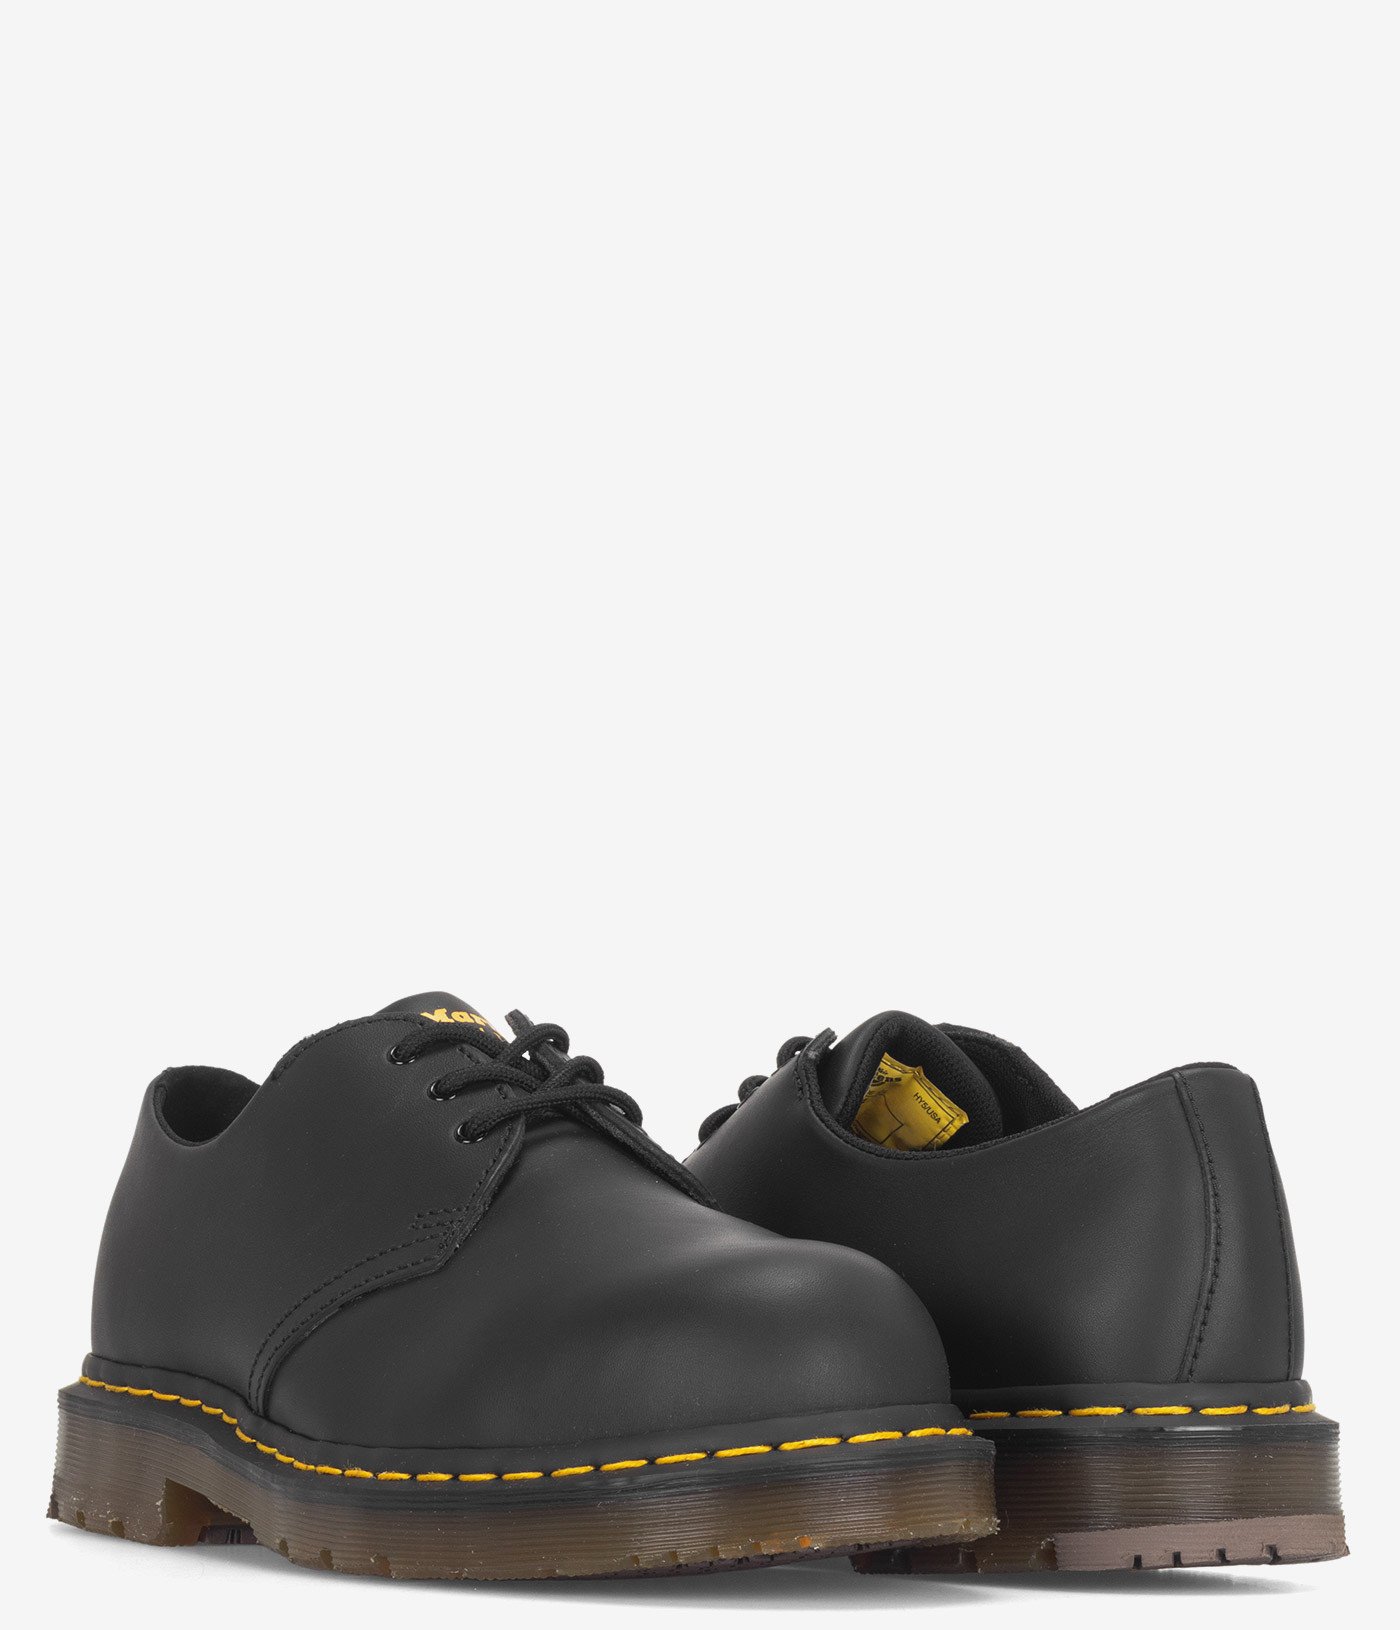 Dr. Martens 1461 Slip Resistant Steel Toe Shoes | Pair